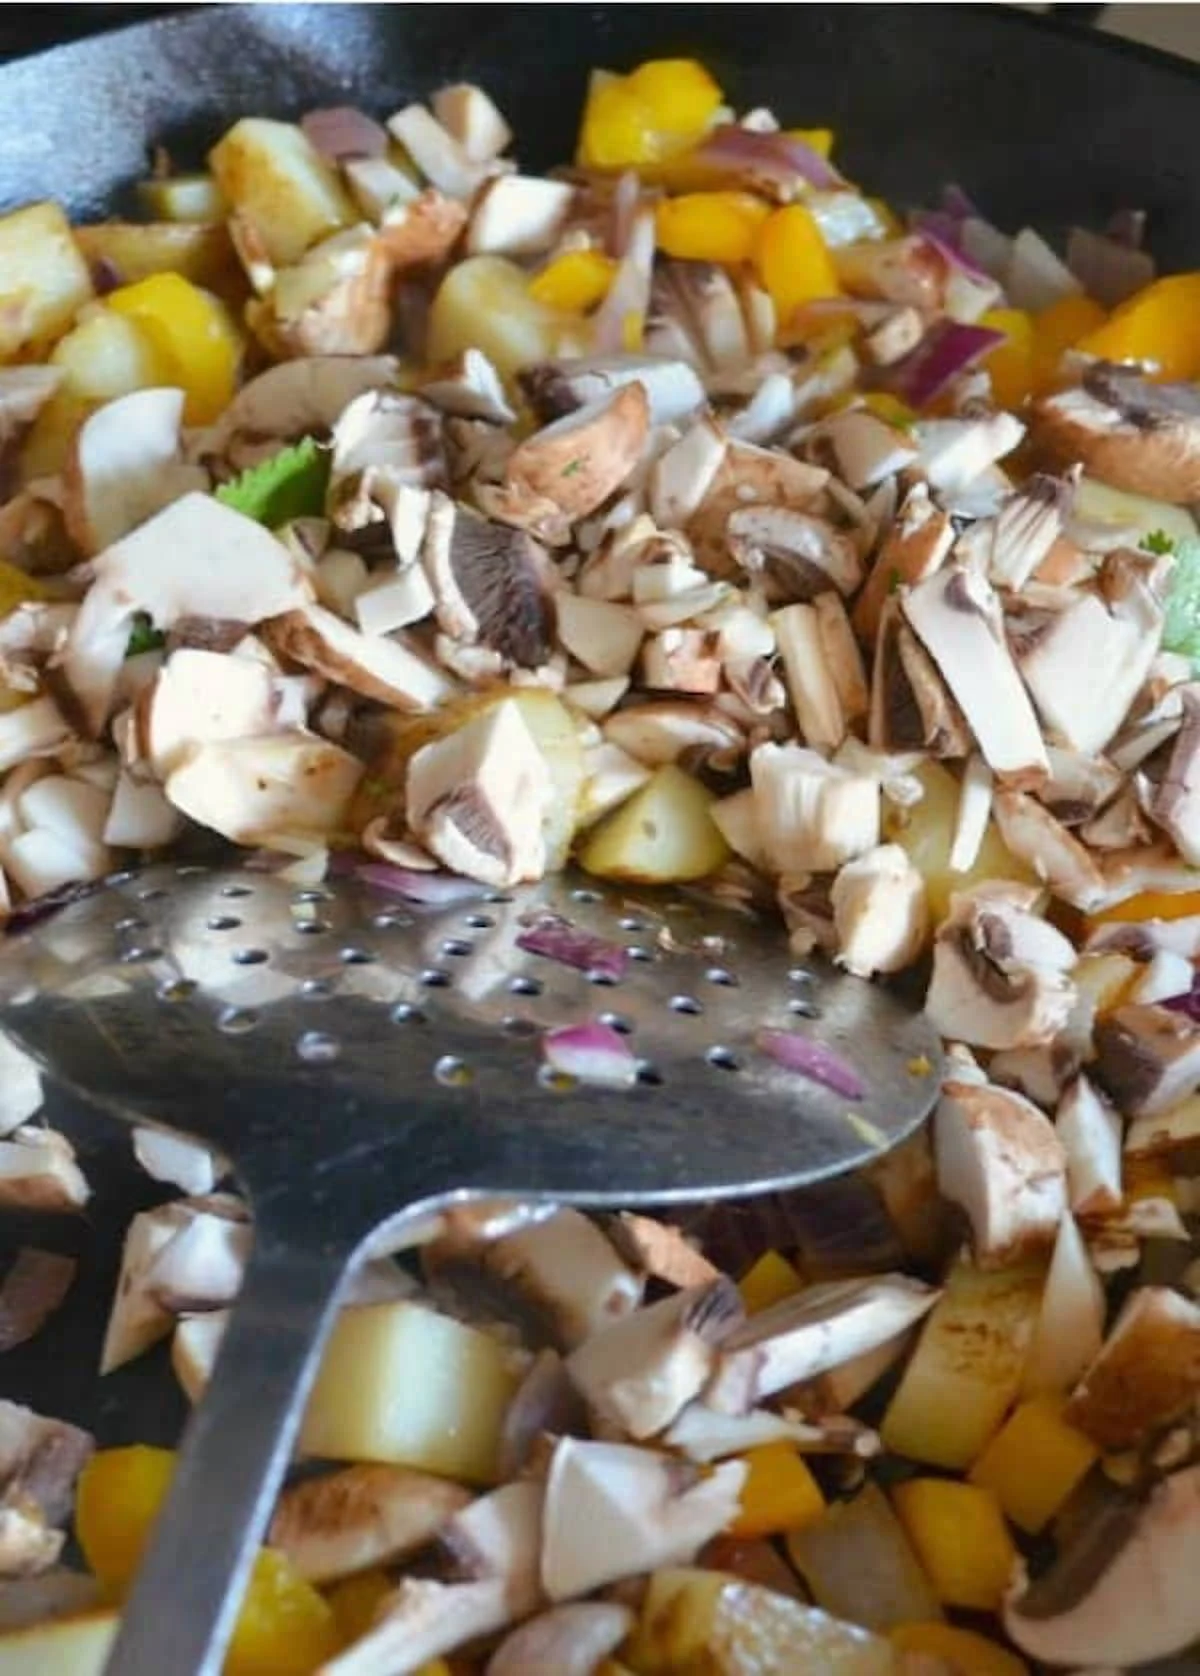 Add sliced mushrooms to breakfast potatoes for Breakfast Burrito Recipe.